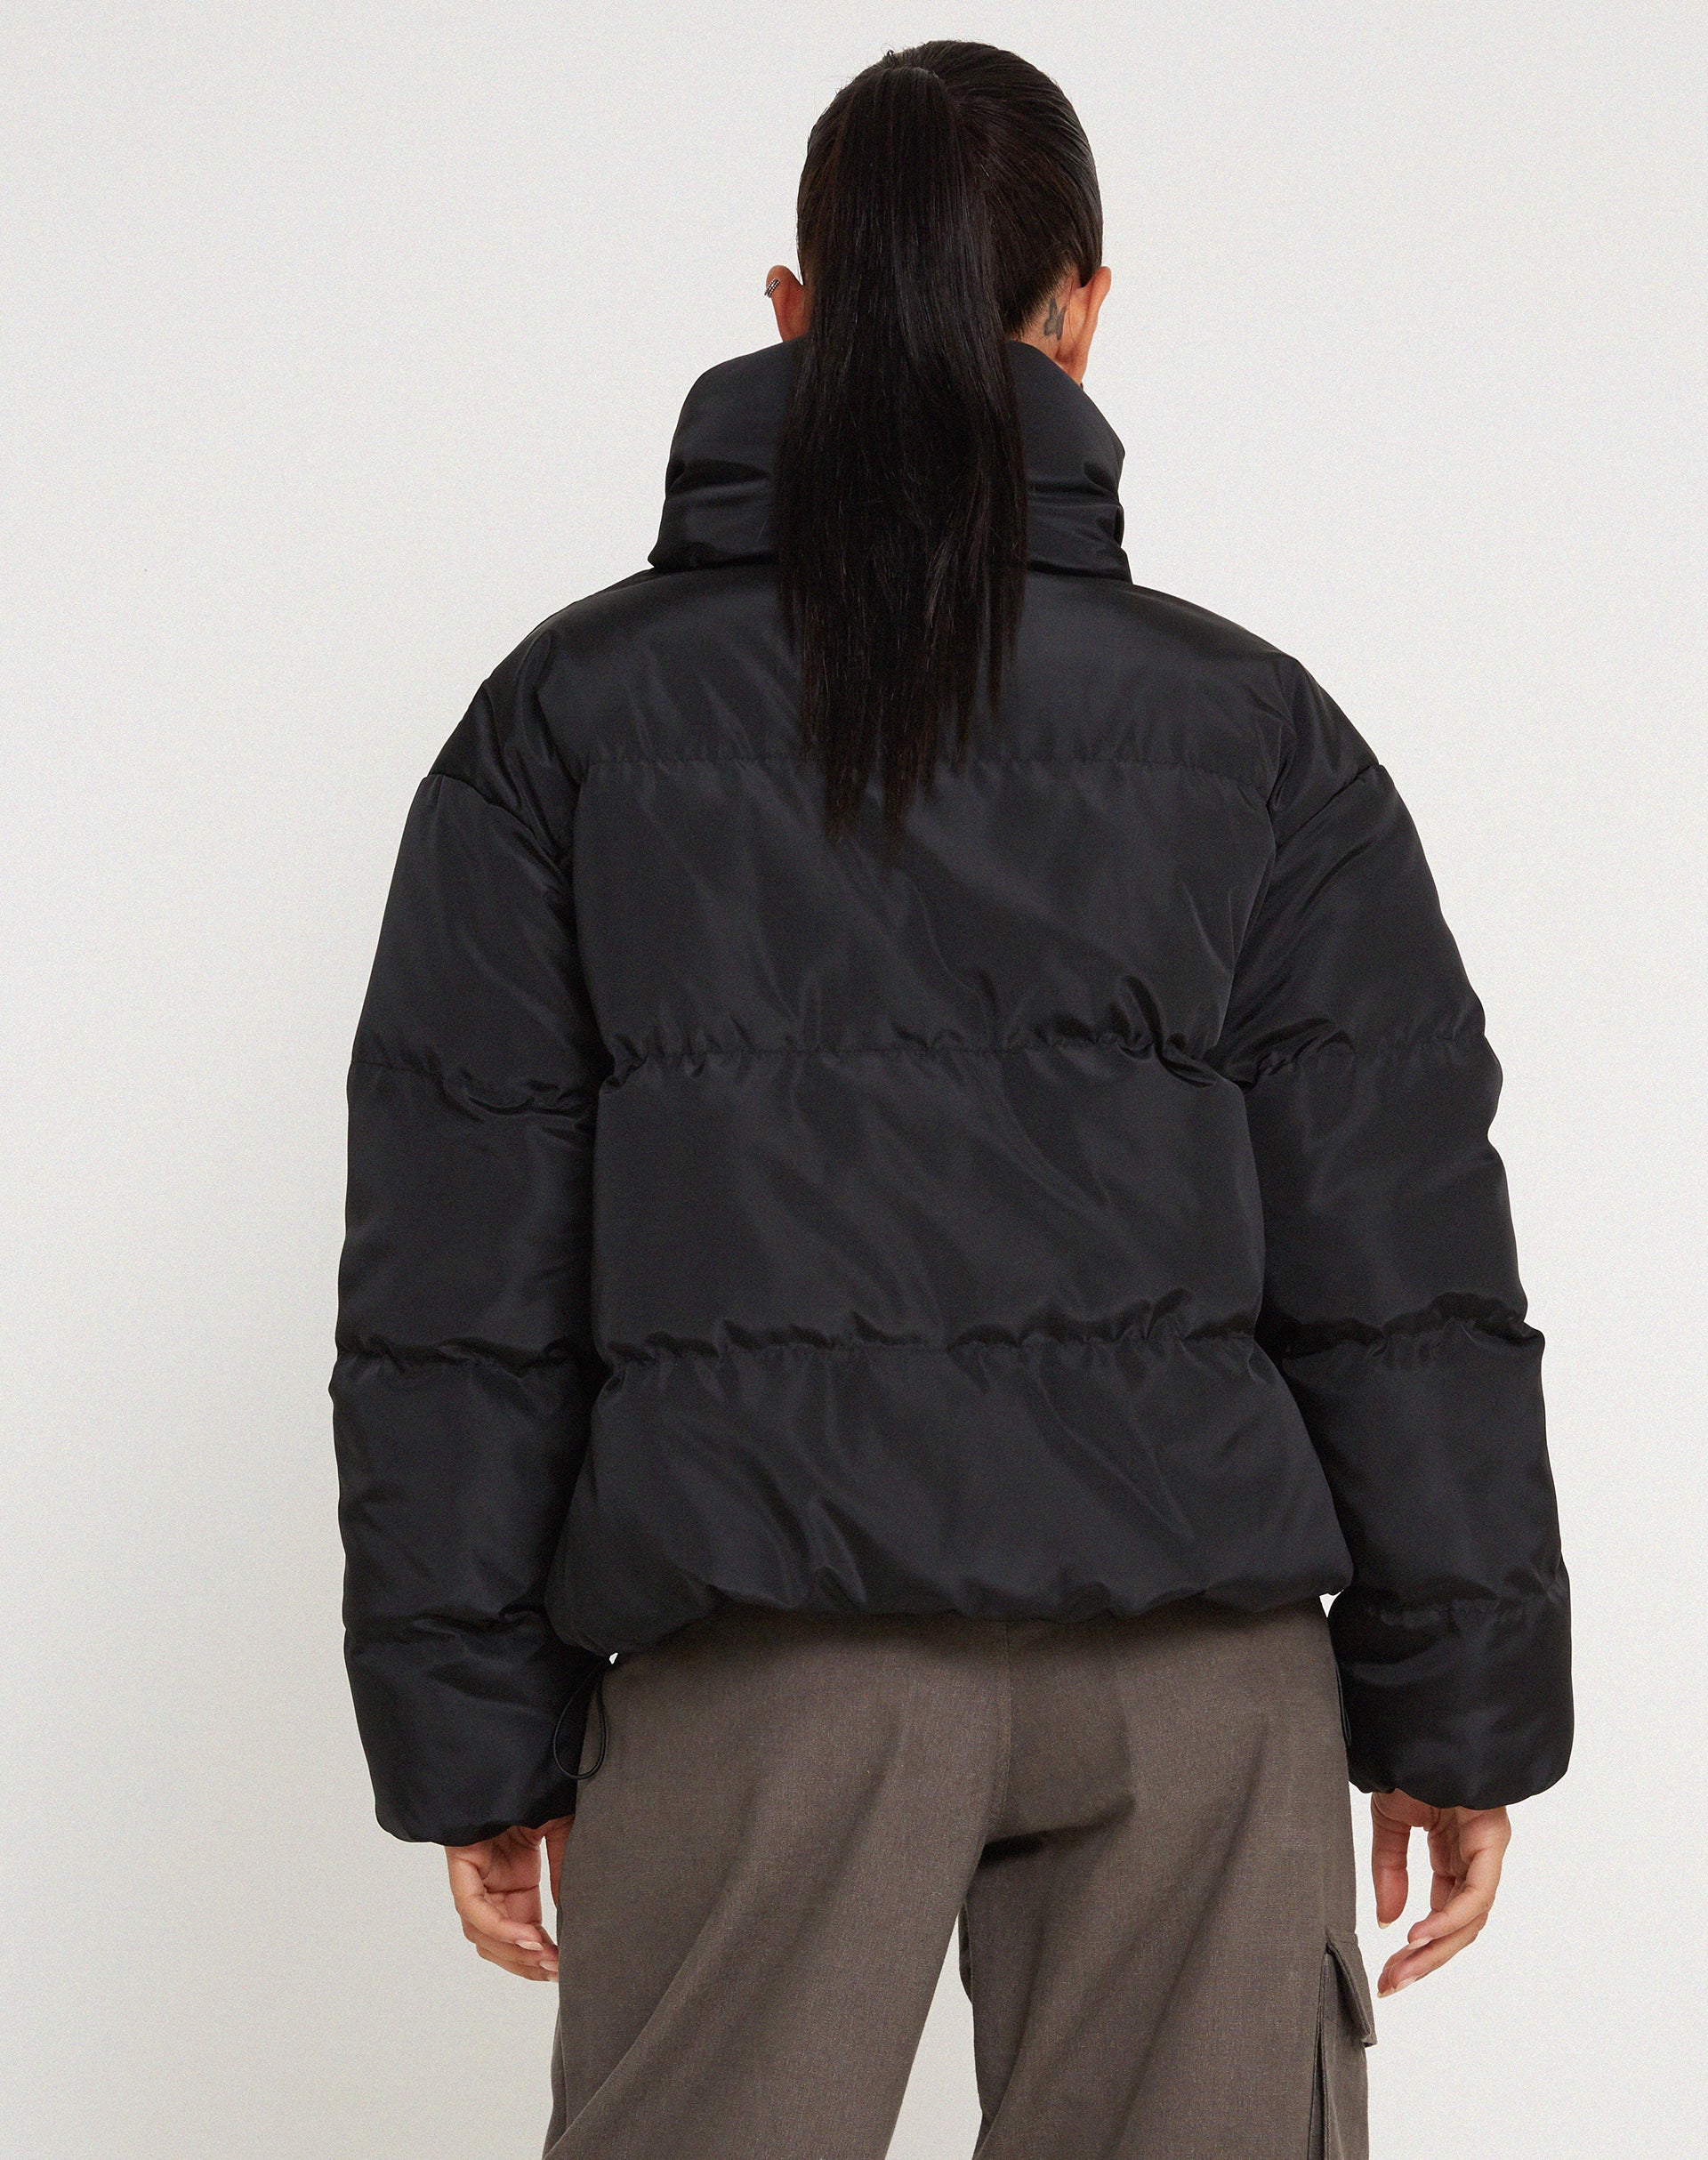 image of Kimbu Jacket in Black